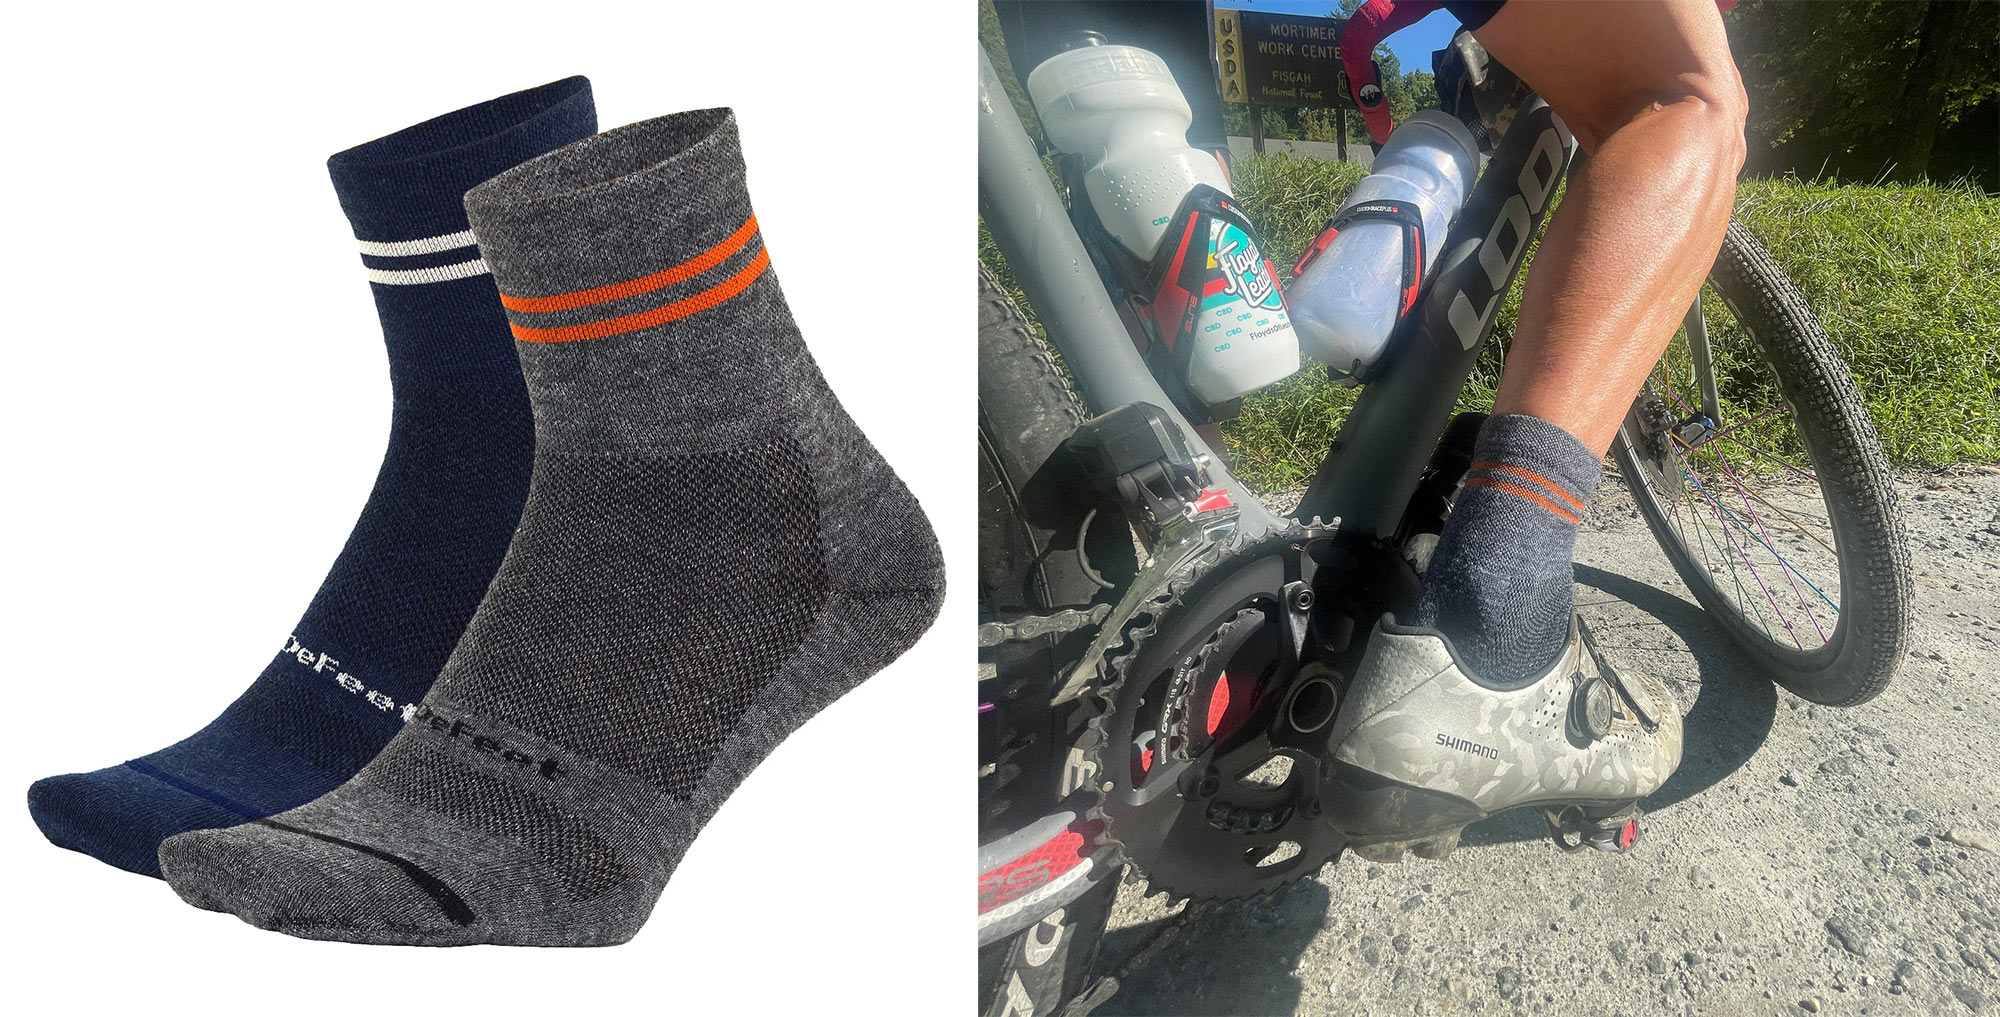 Defeet wooleator pro cycling socks shown in gravel gray